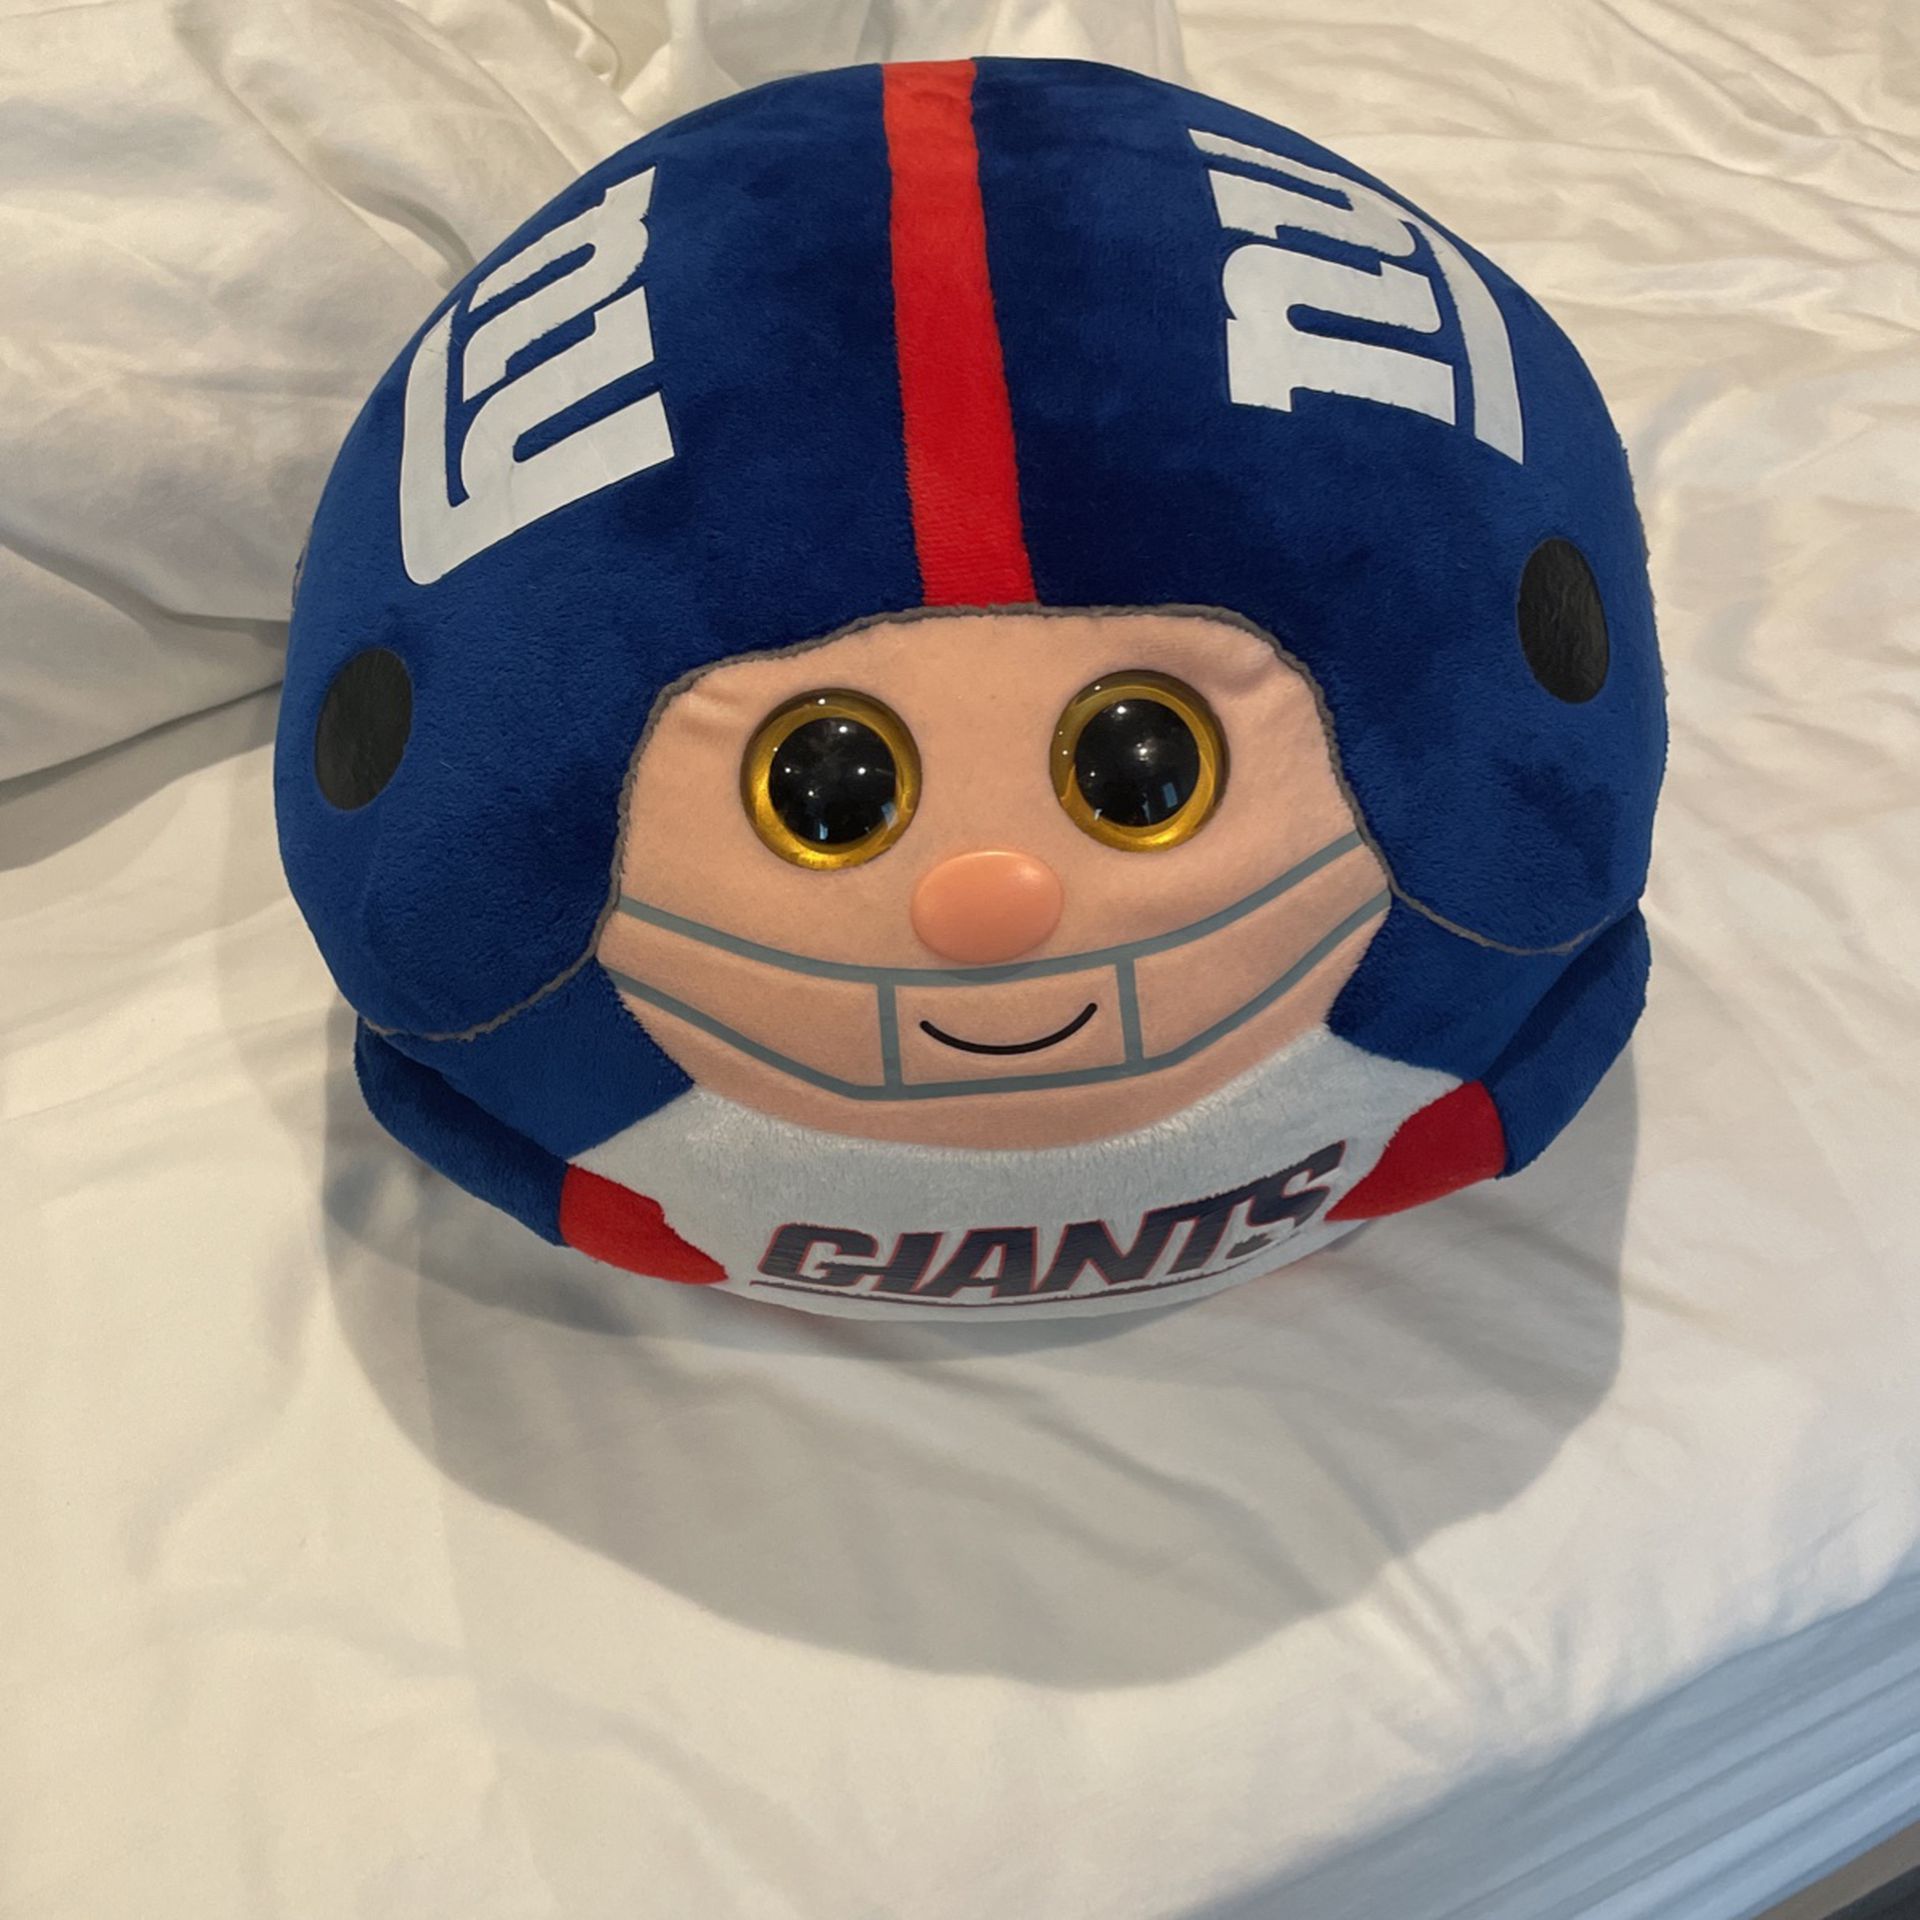 Ny Giants Stuffed Pillow